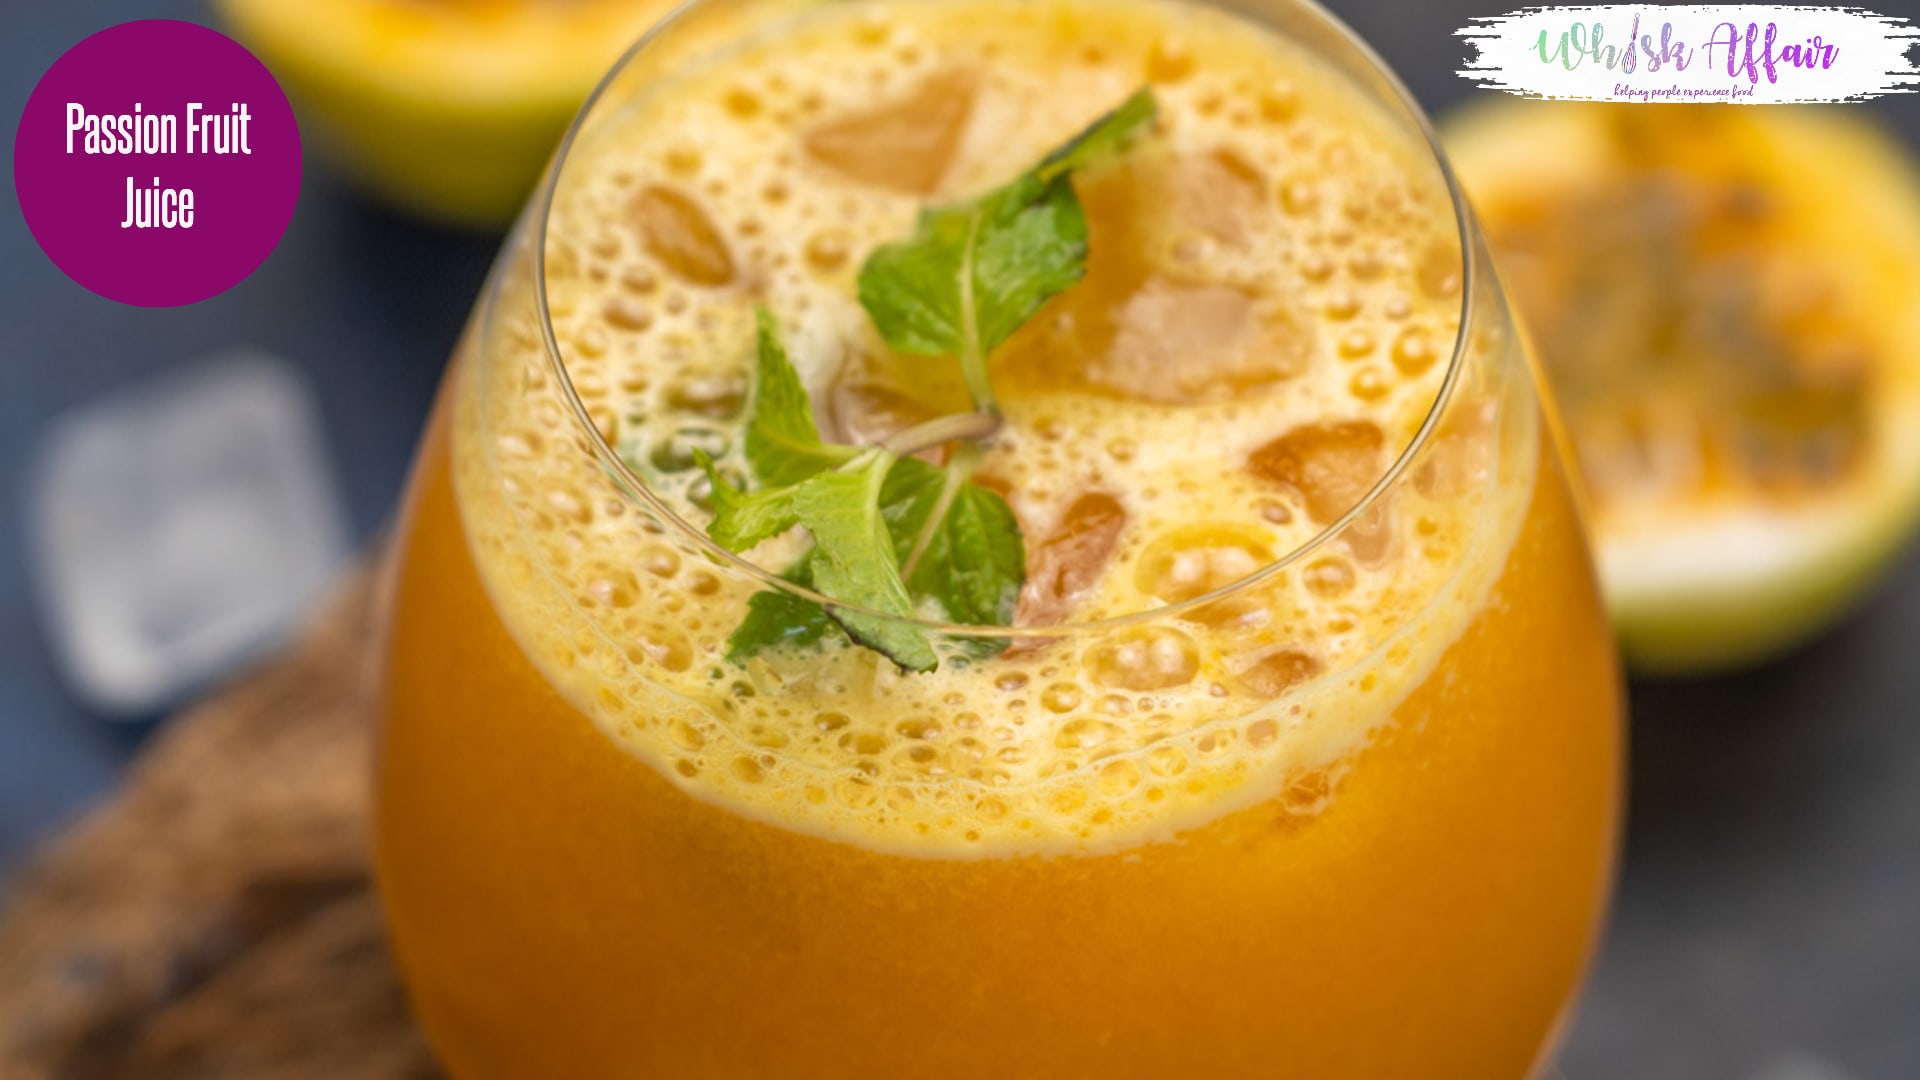 nedbryder Ja metallisk How To Make Homemade Passion Fruit Juice Recipe + Video